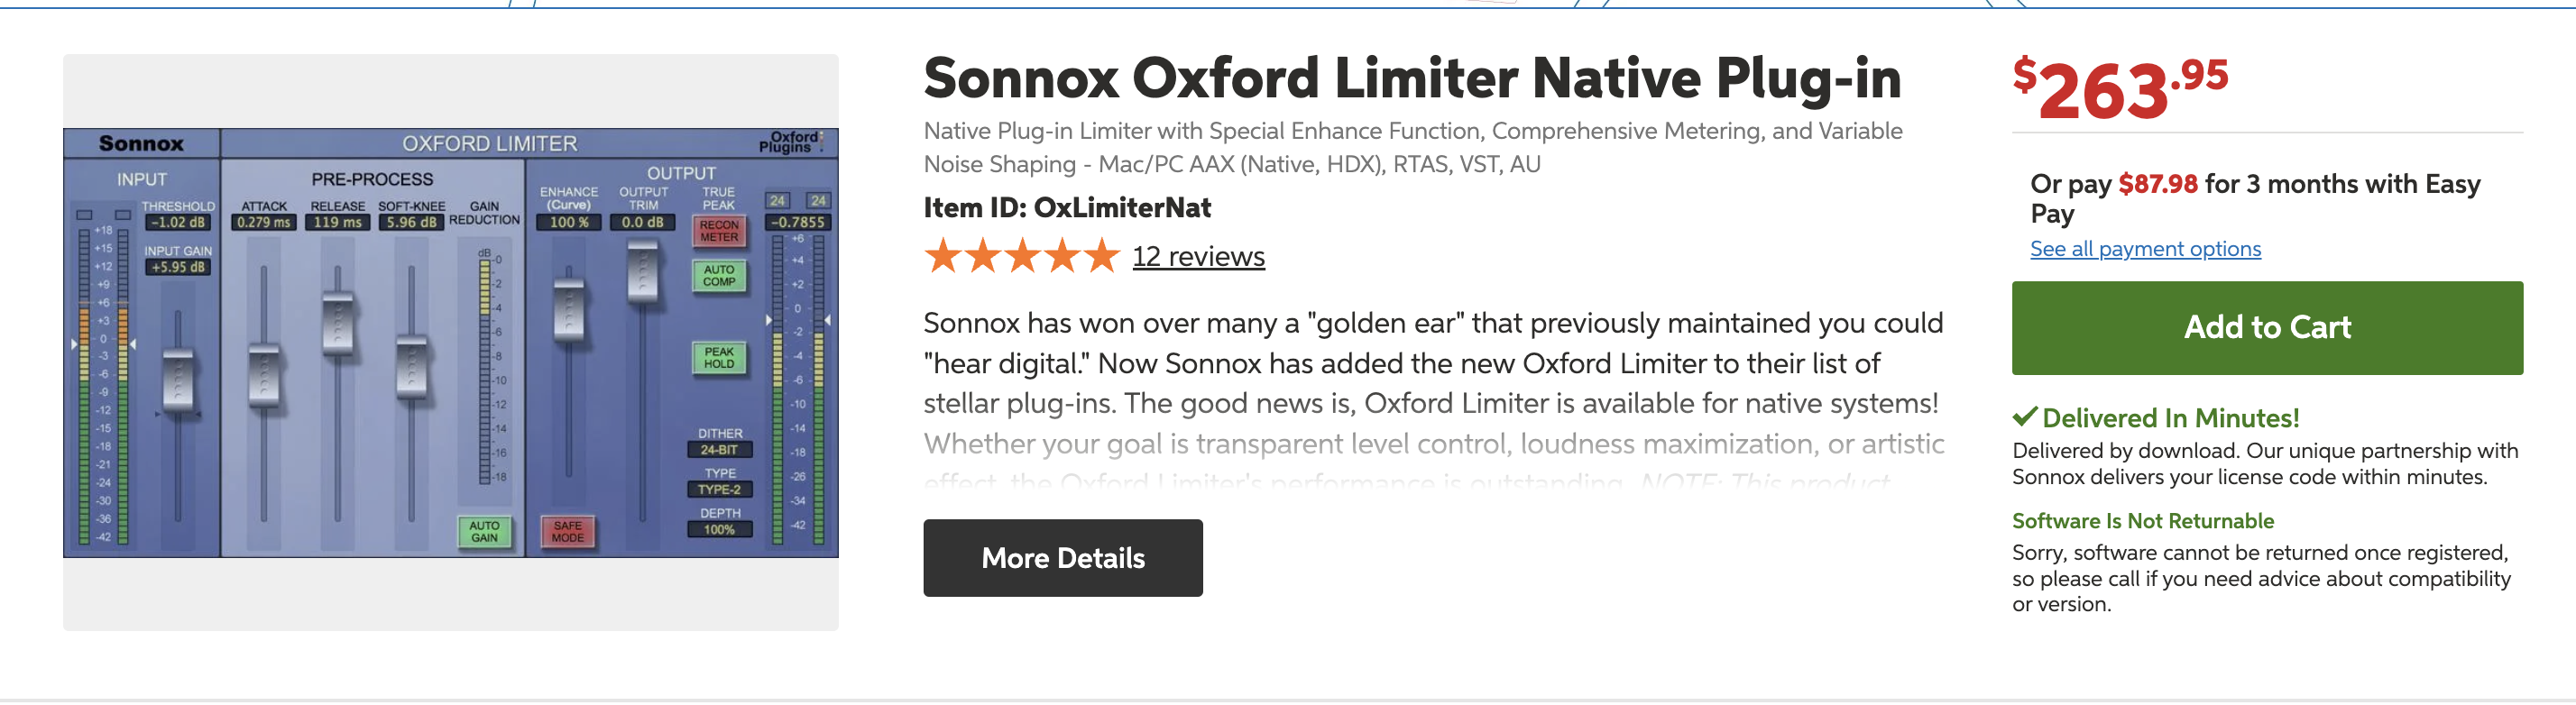 Sonnox Oxford Limiter V3